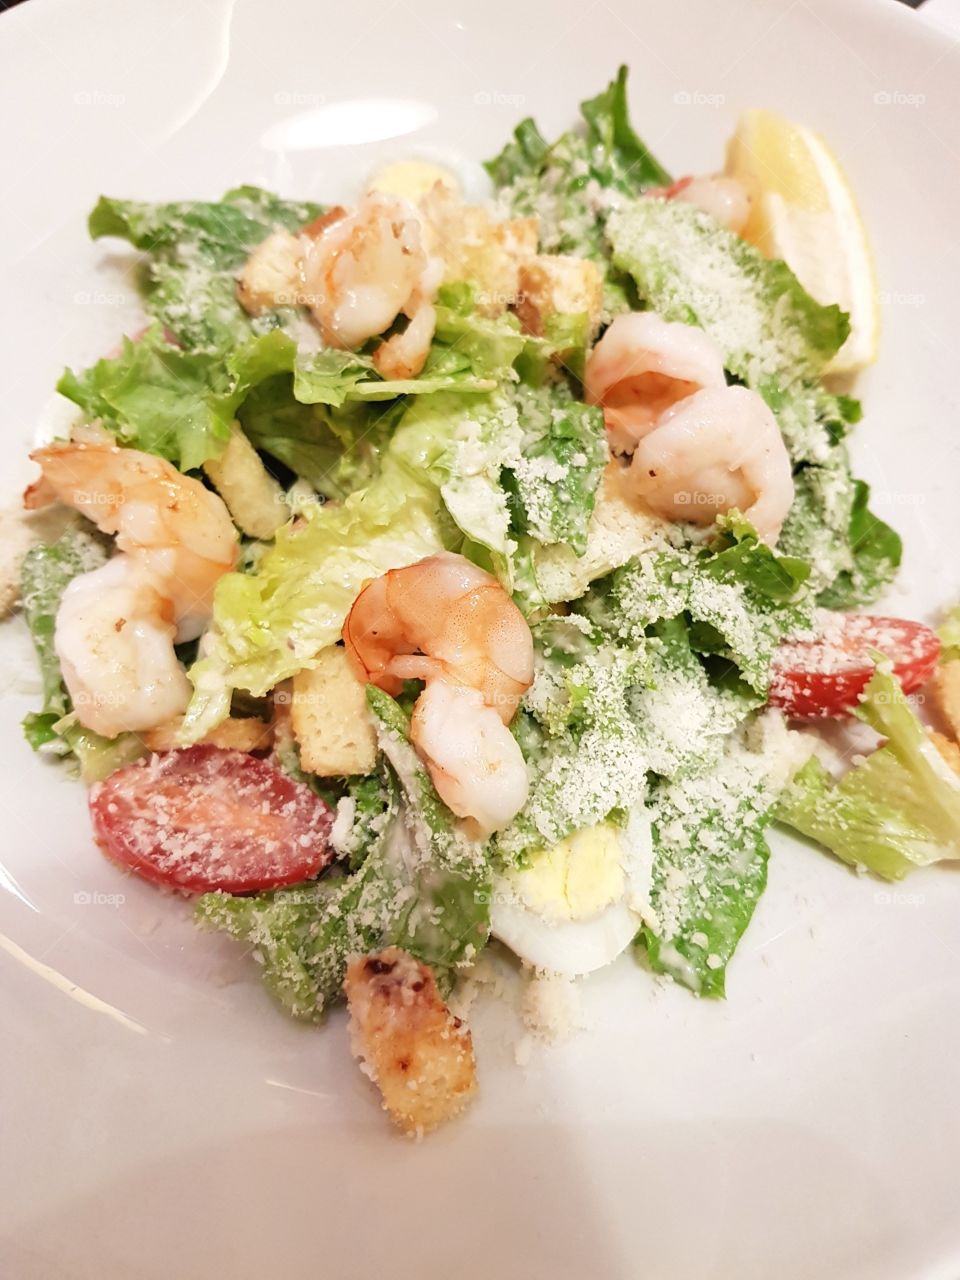 Caesar salad with shrimps.